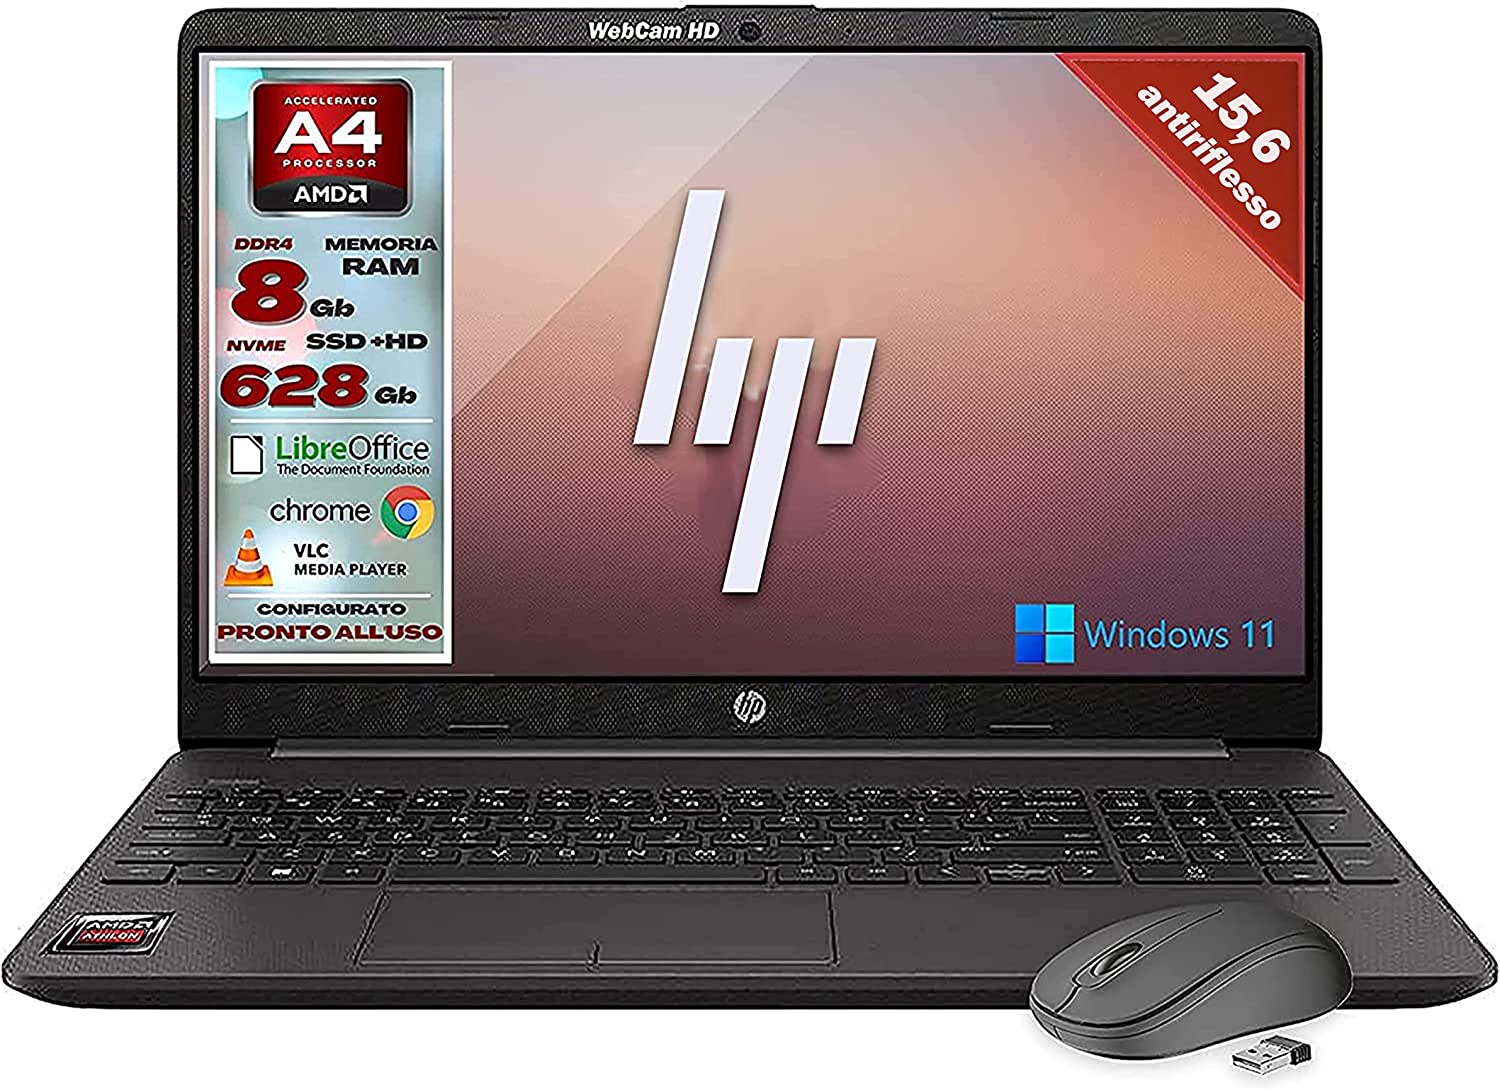 HP - Ordinateur portable PC portable, écran Full HD de 15,6